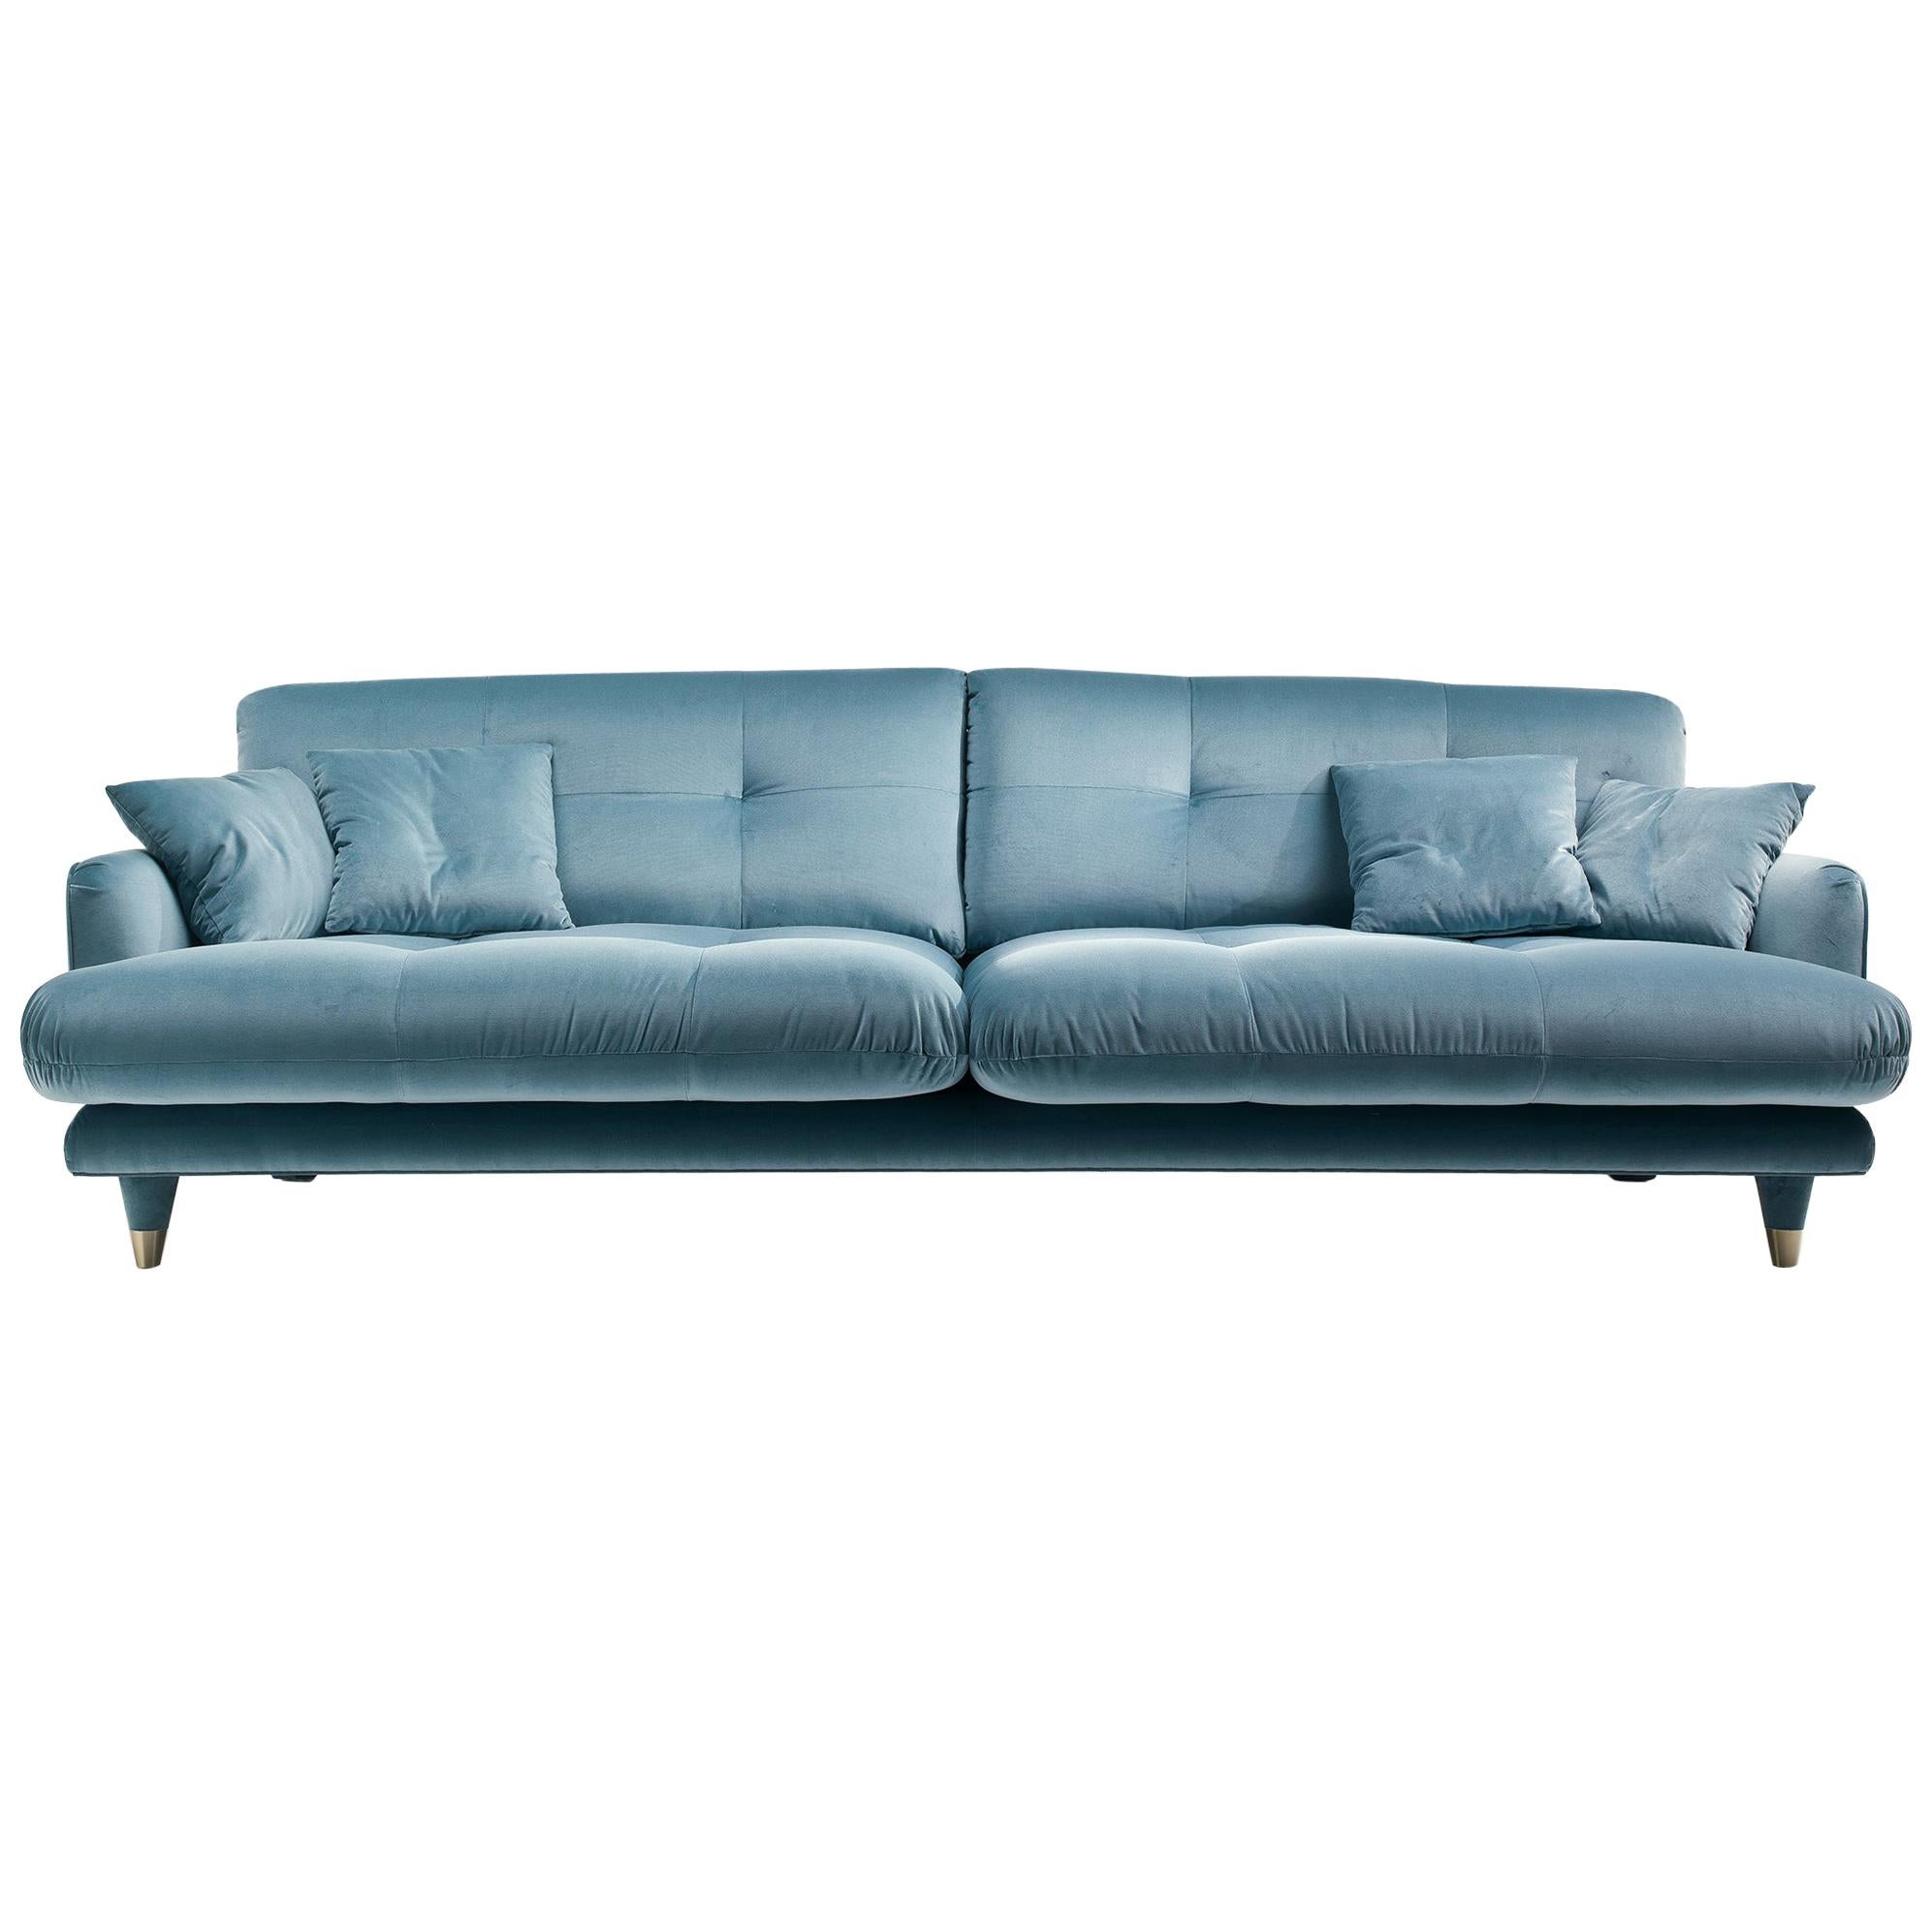 Large Century Upholstered Sofa in Light Blue